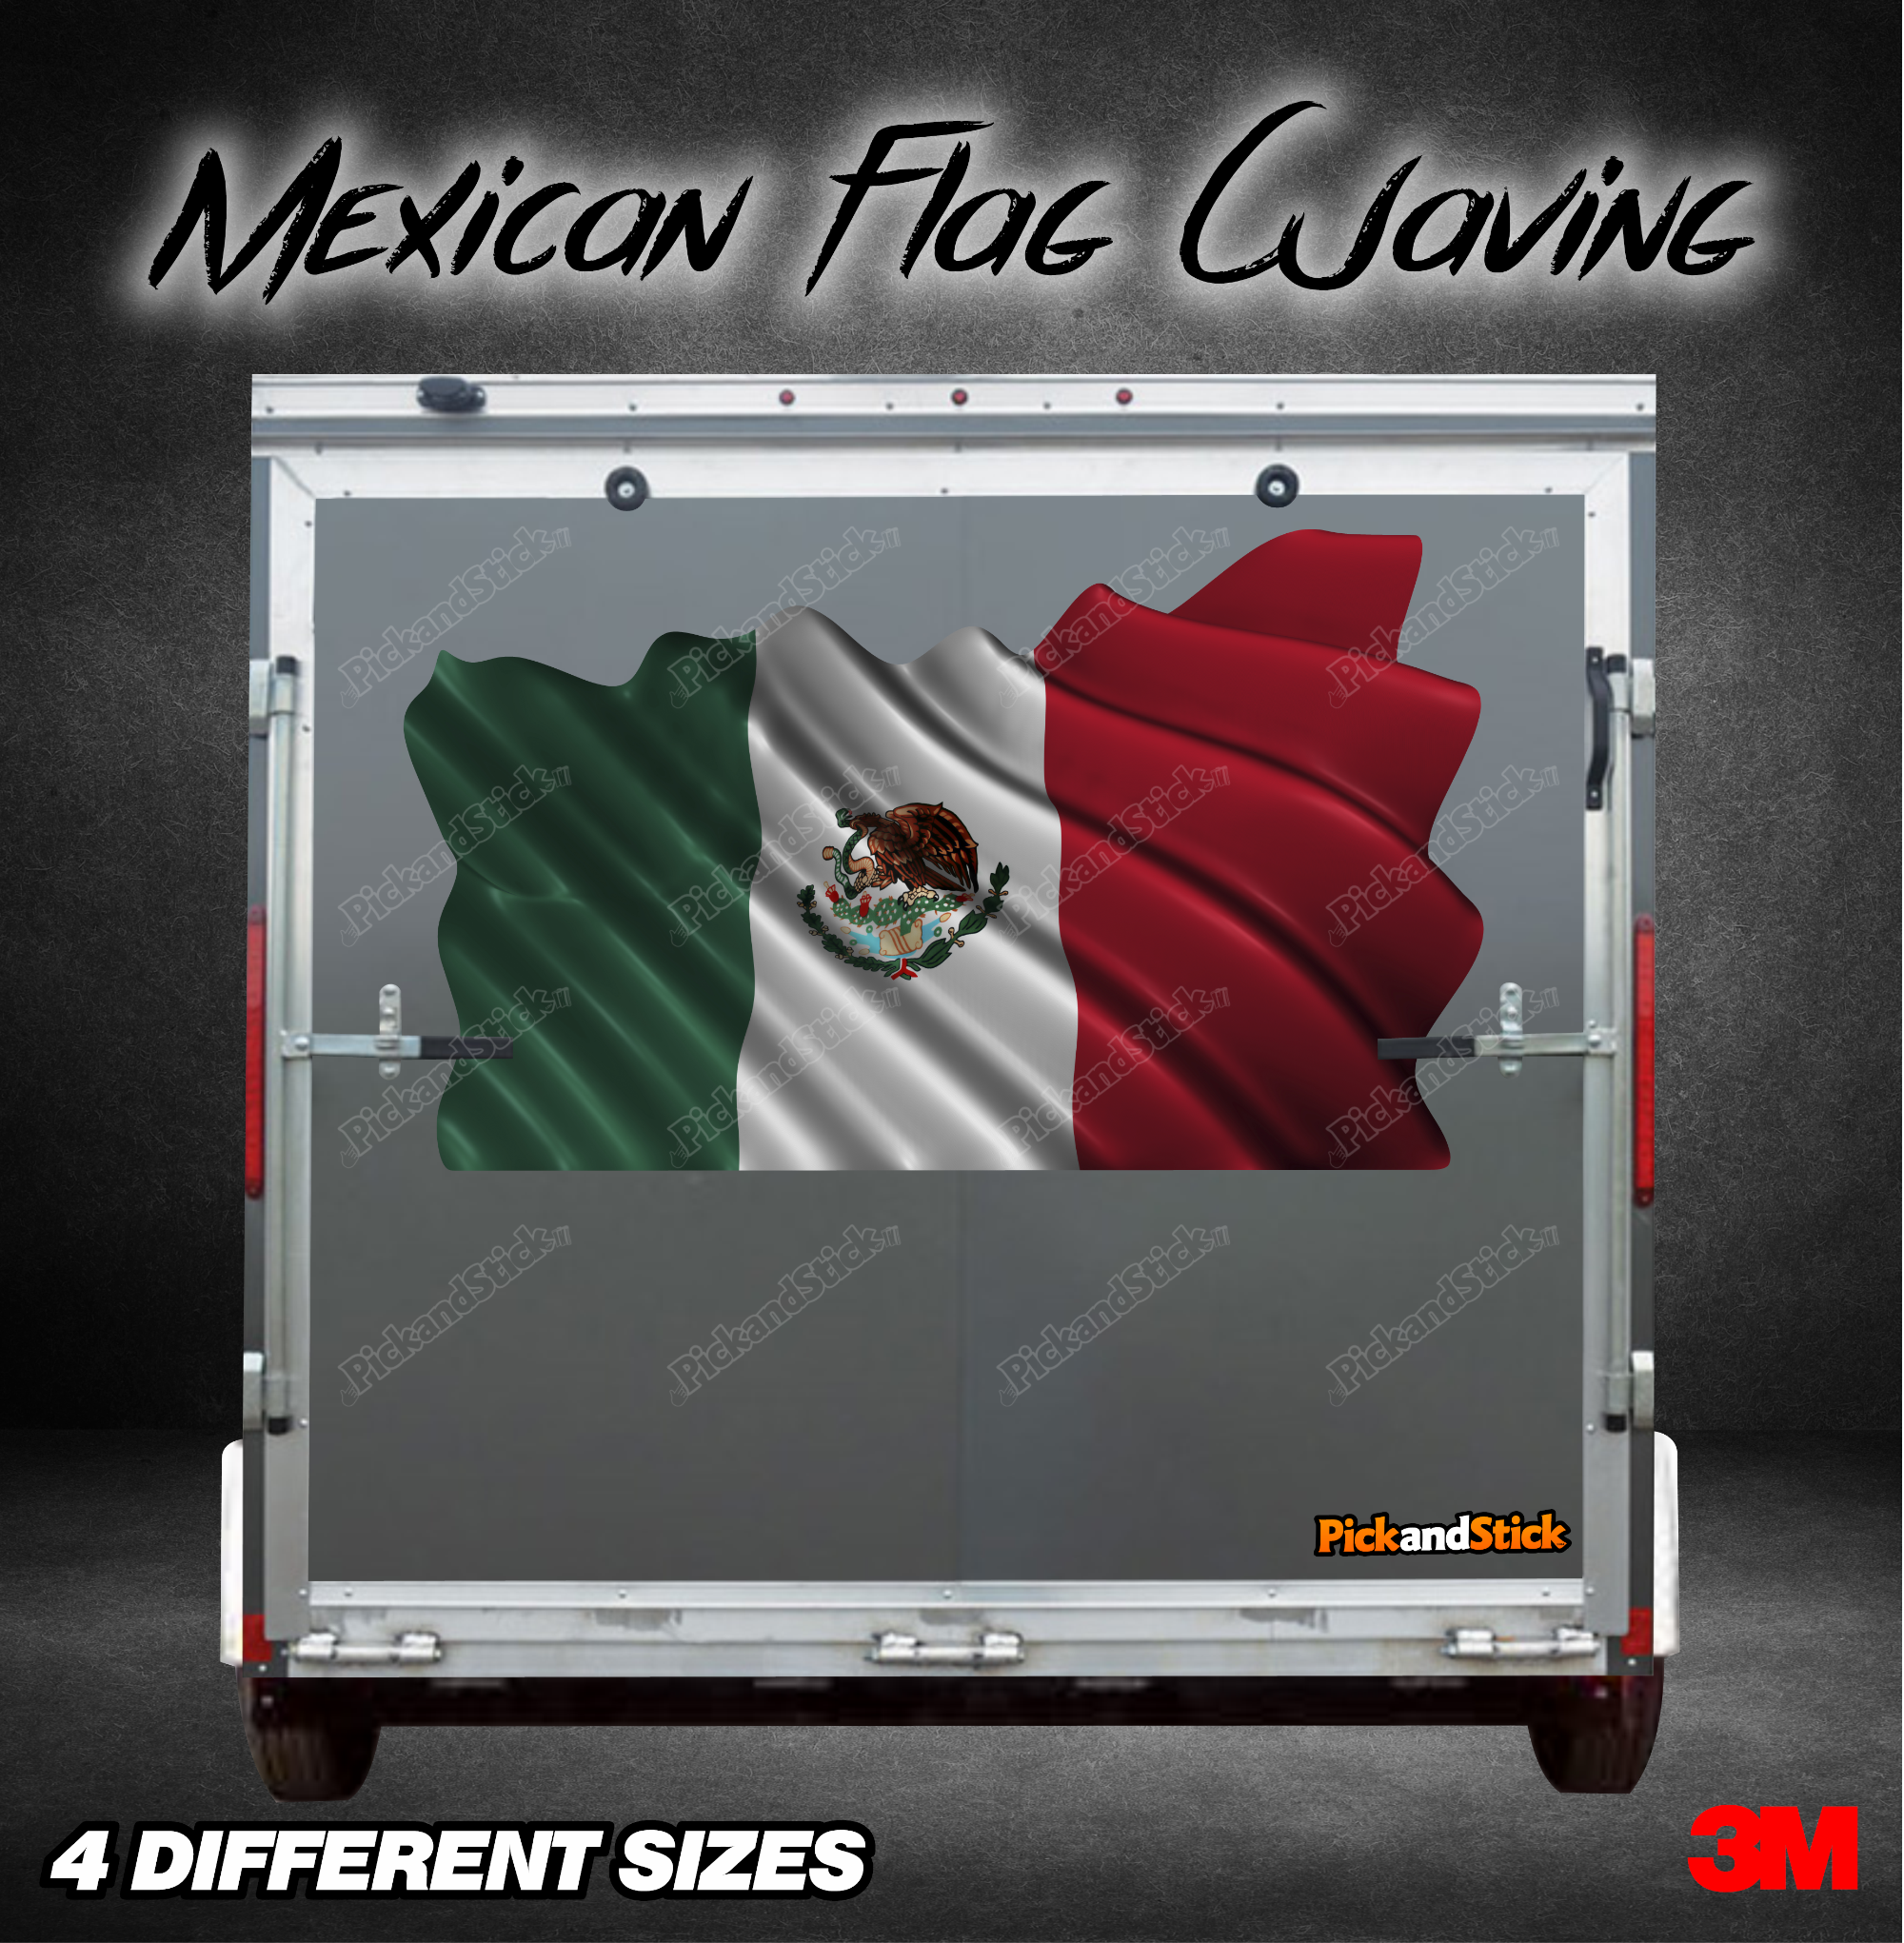 Mexican Flag Waving Graphic - PickandStickcom